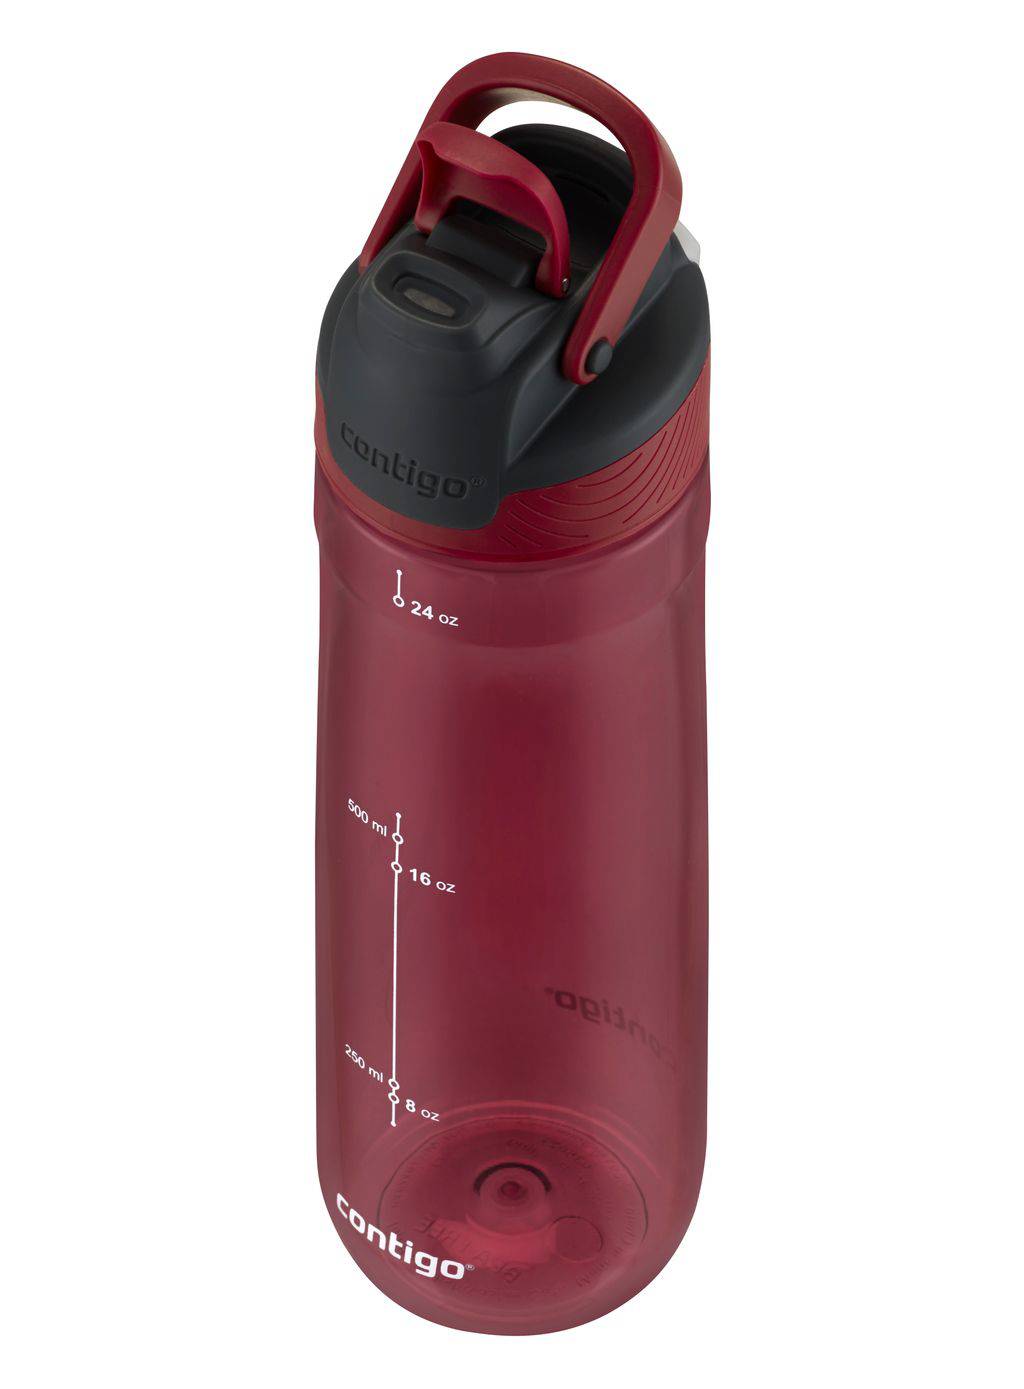 Contigo Autoseal Water Bottle 739ml New Range - LunchBox Inc.